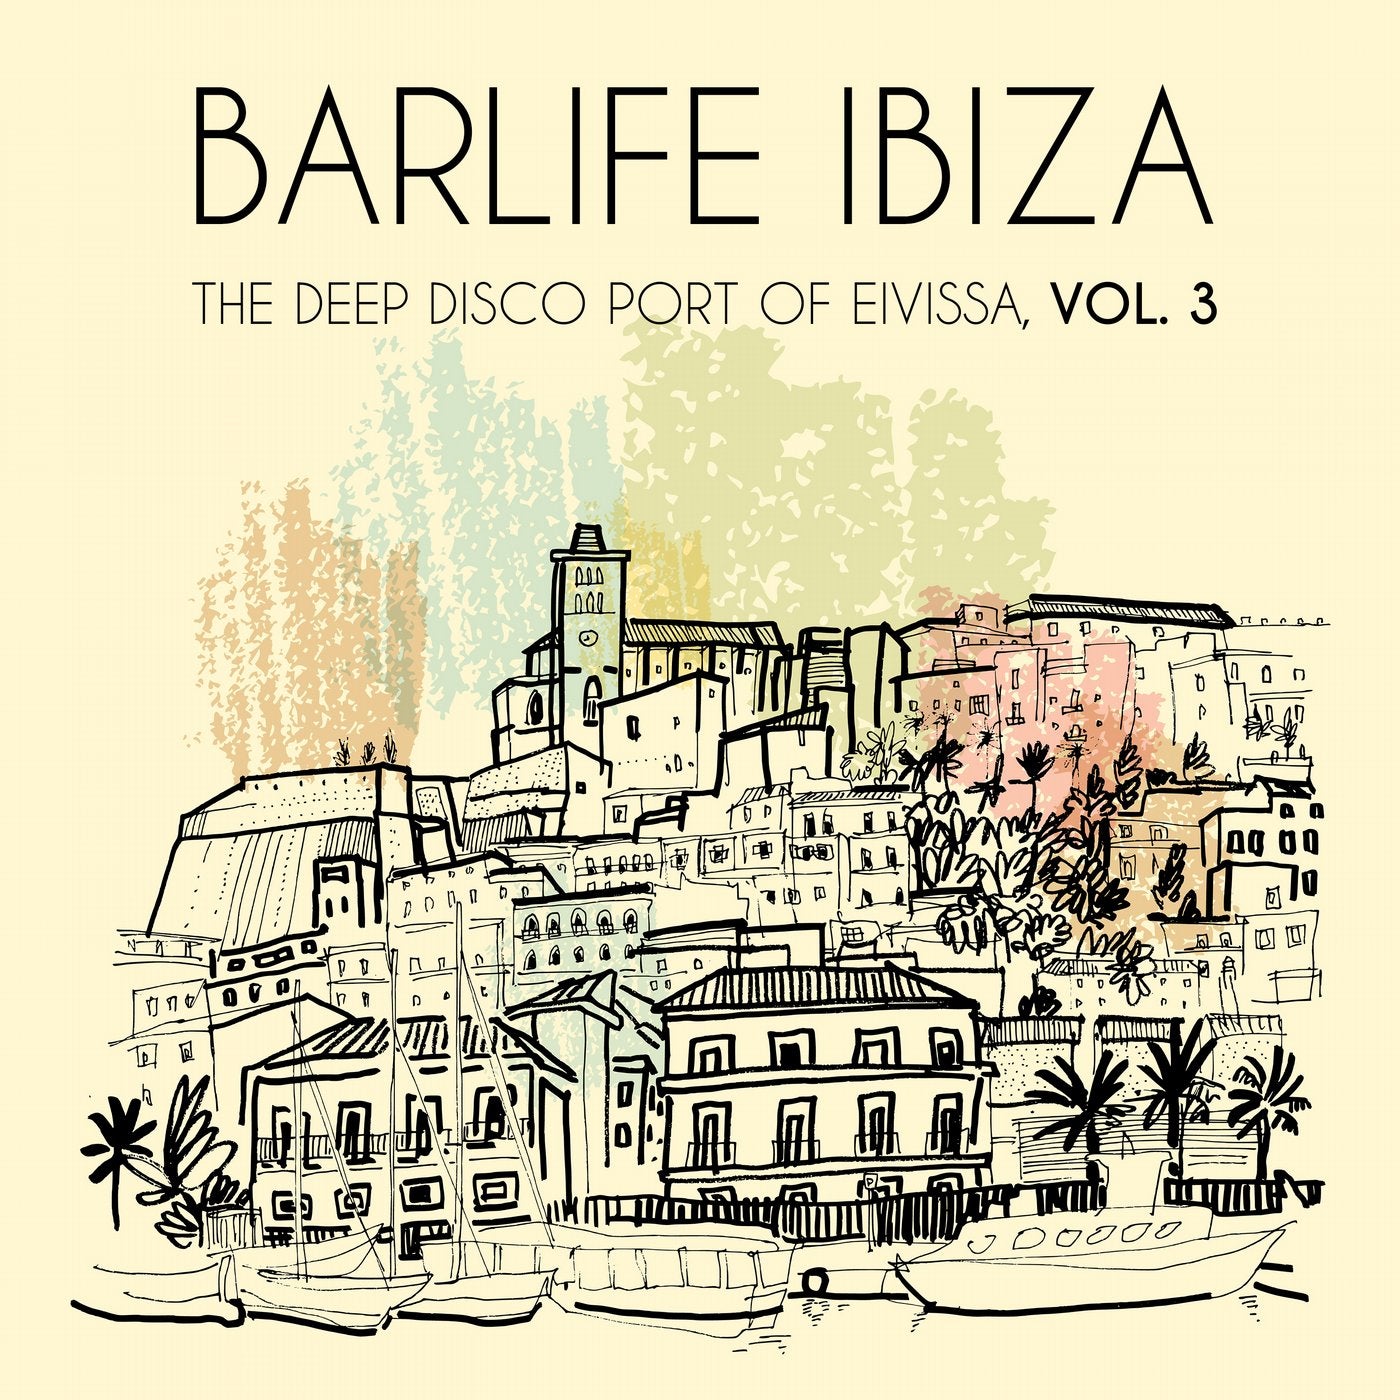 Barlife Ibiza: The Deep Disco Port of Eivissa, Vol. 3